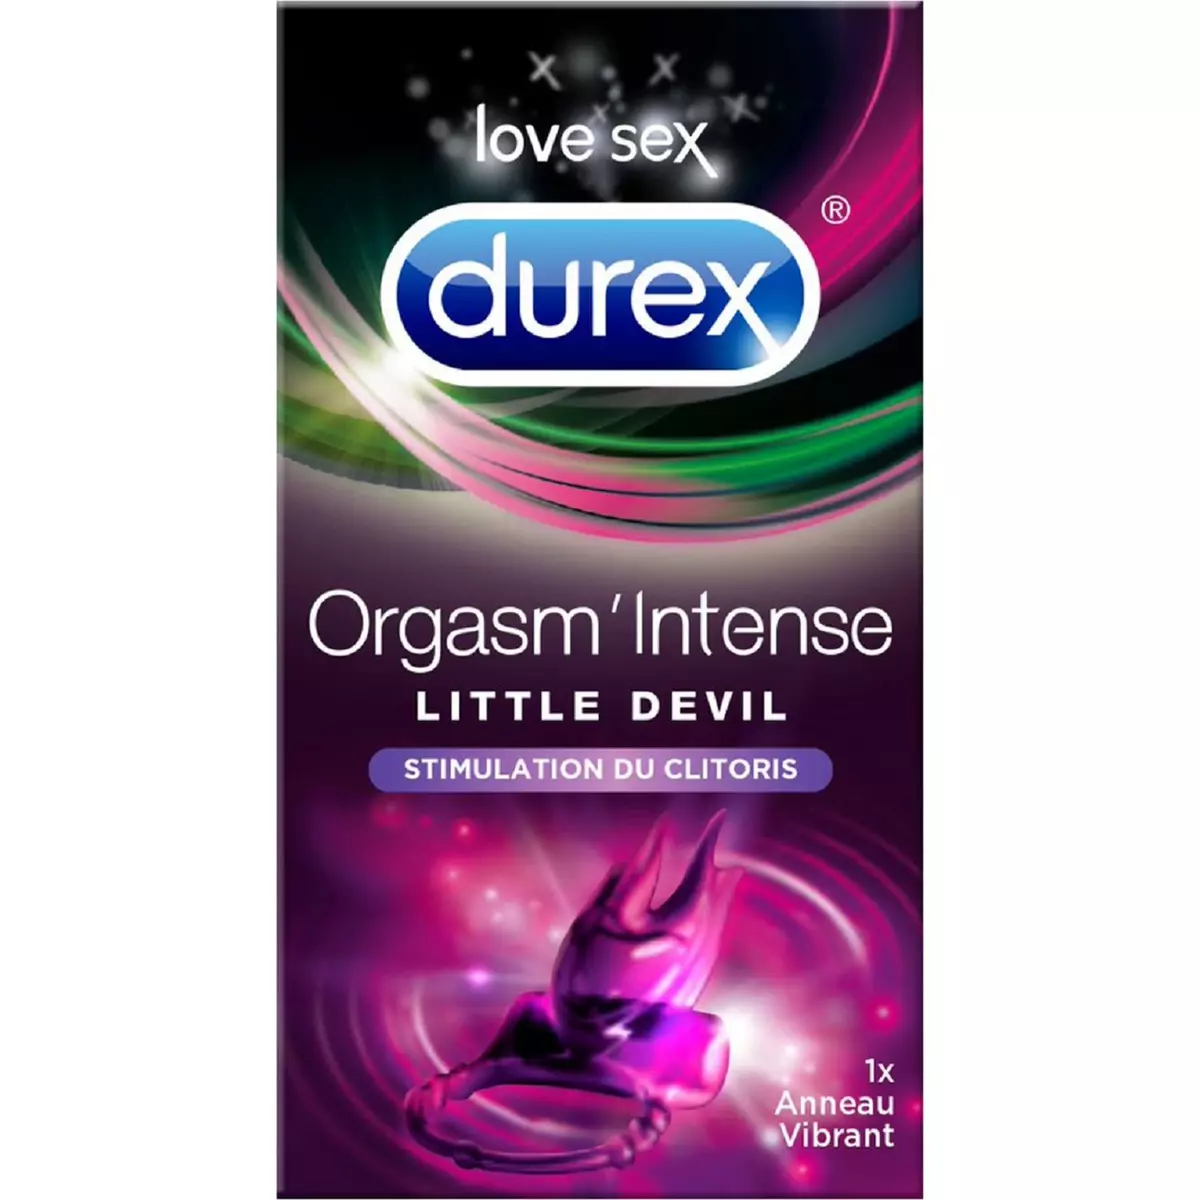 DUREX Orgasm' Intense anneau vibrant stimulant 1 anneau